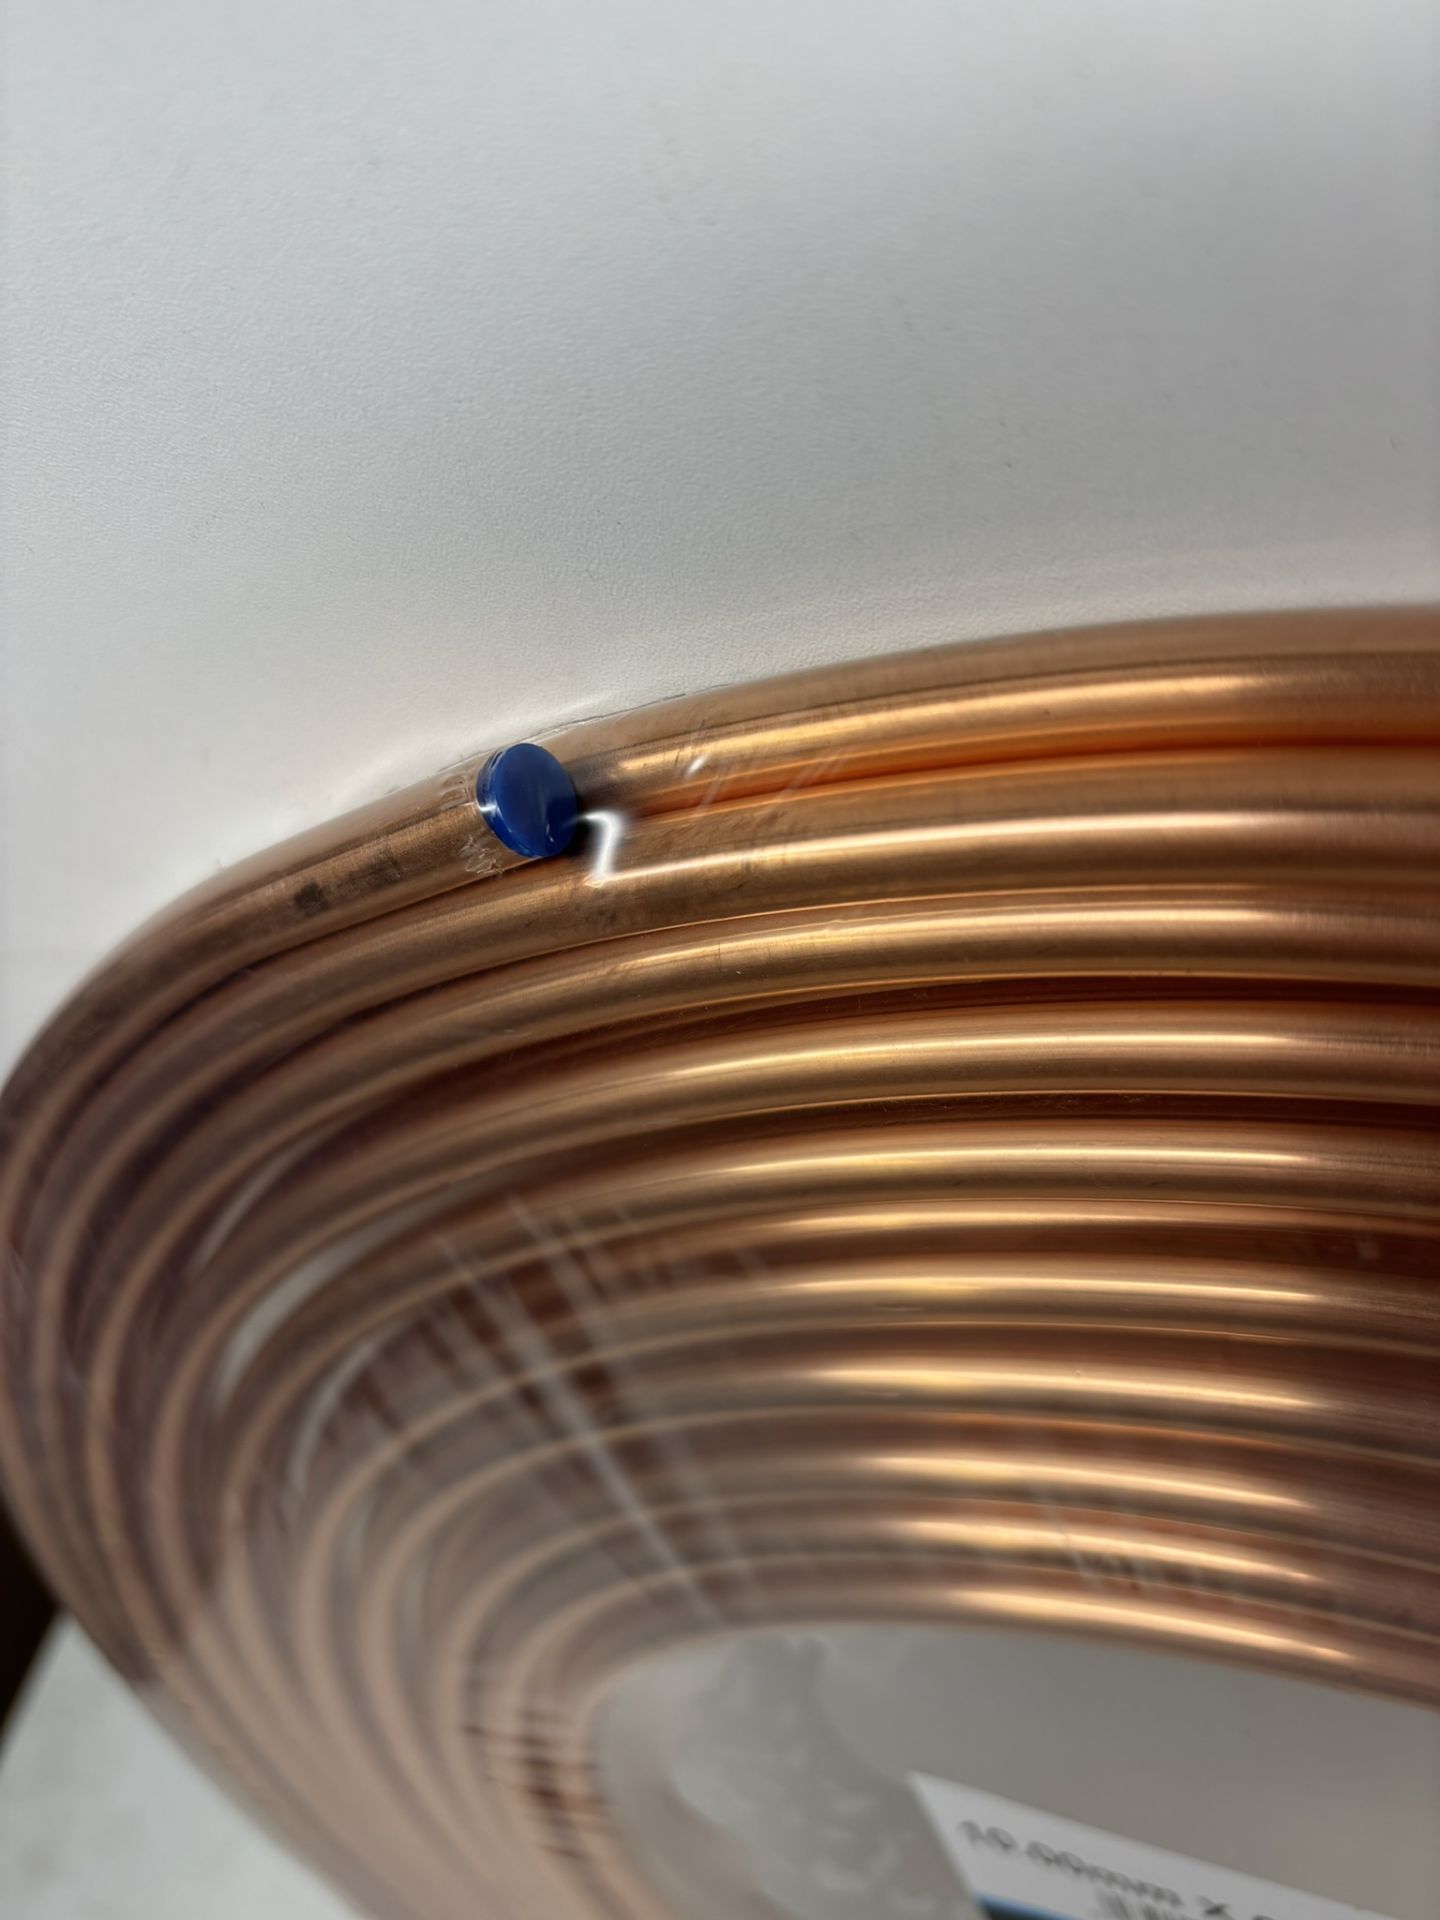 3 x Lawton 10.00mm x 0.70mm x 25Mtr Copper Plumbing Tube Coils - Image 6 of 9